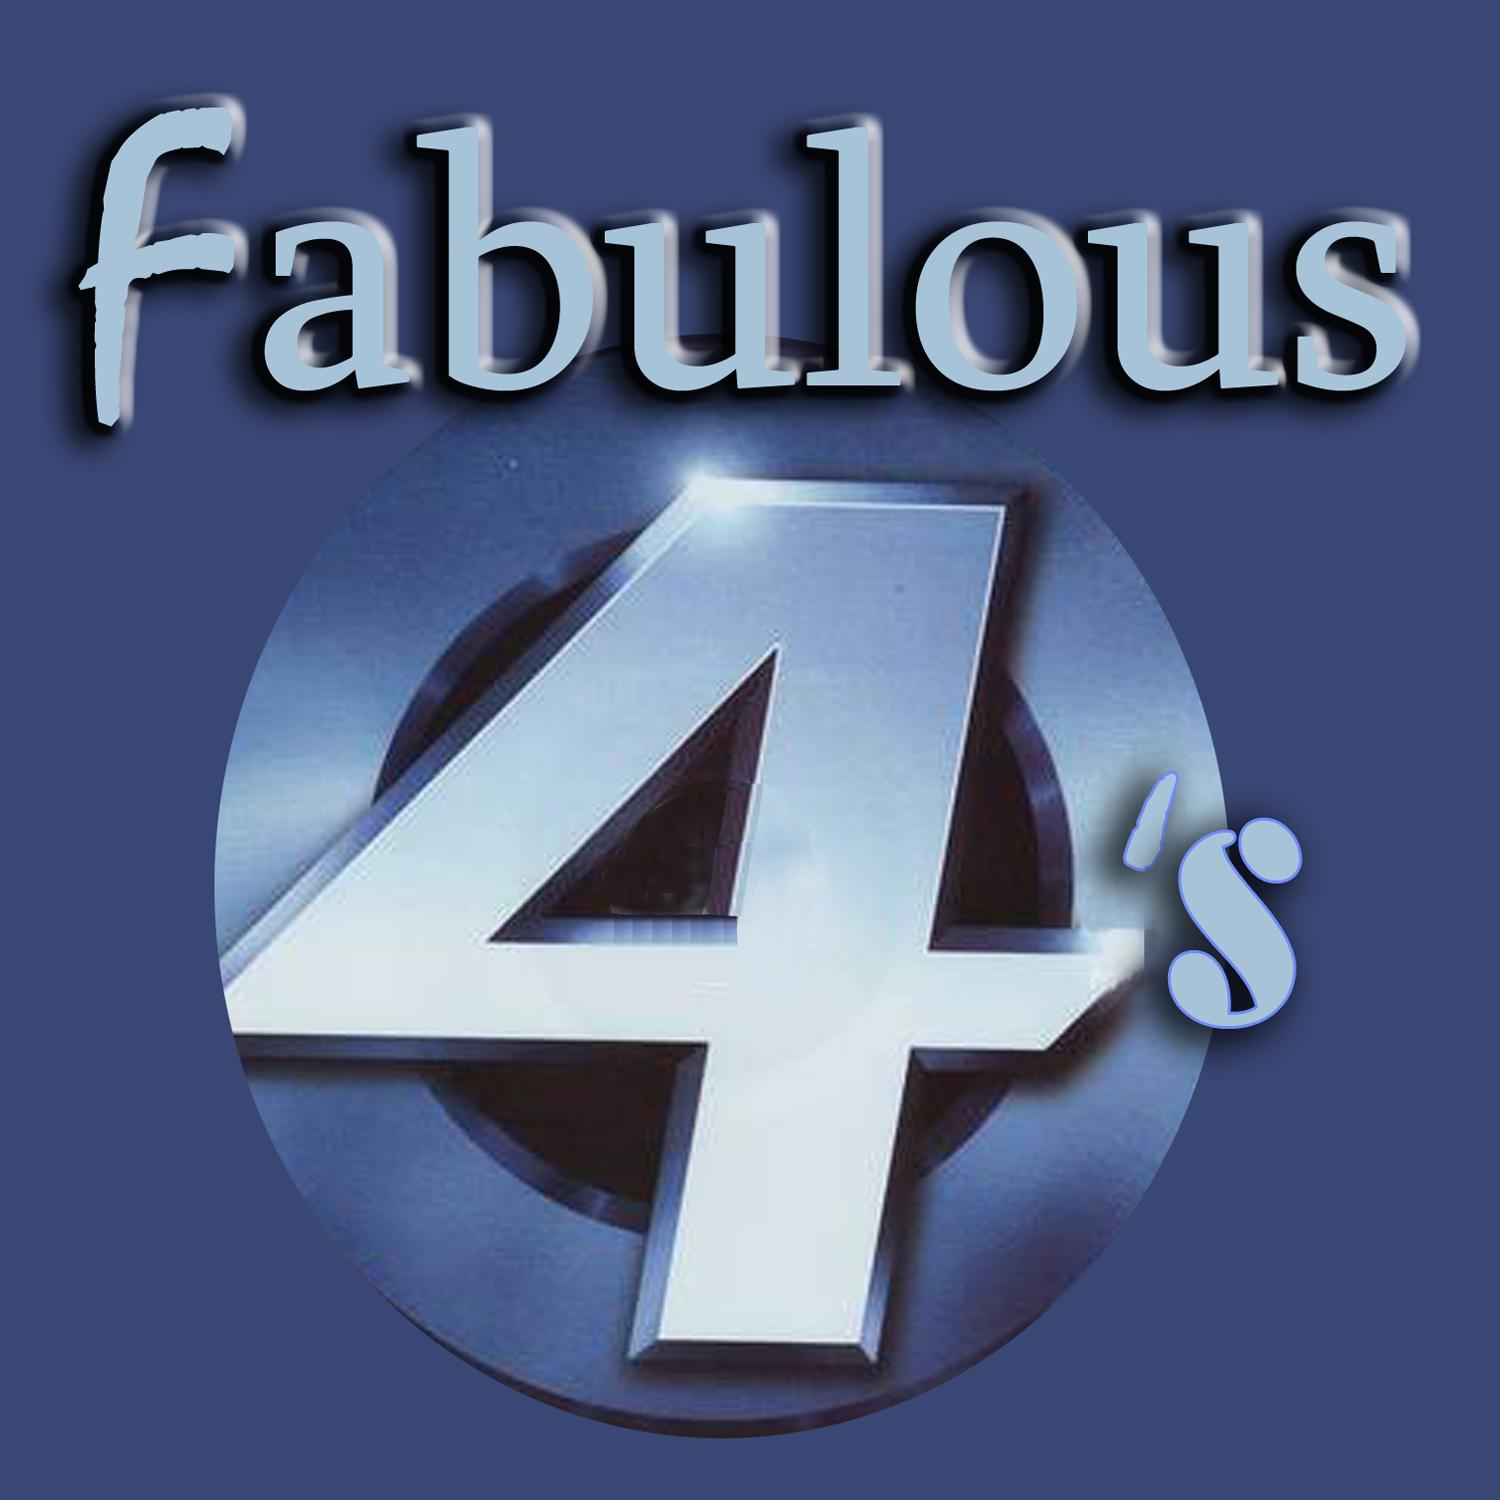 Fabulous Four's